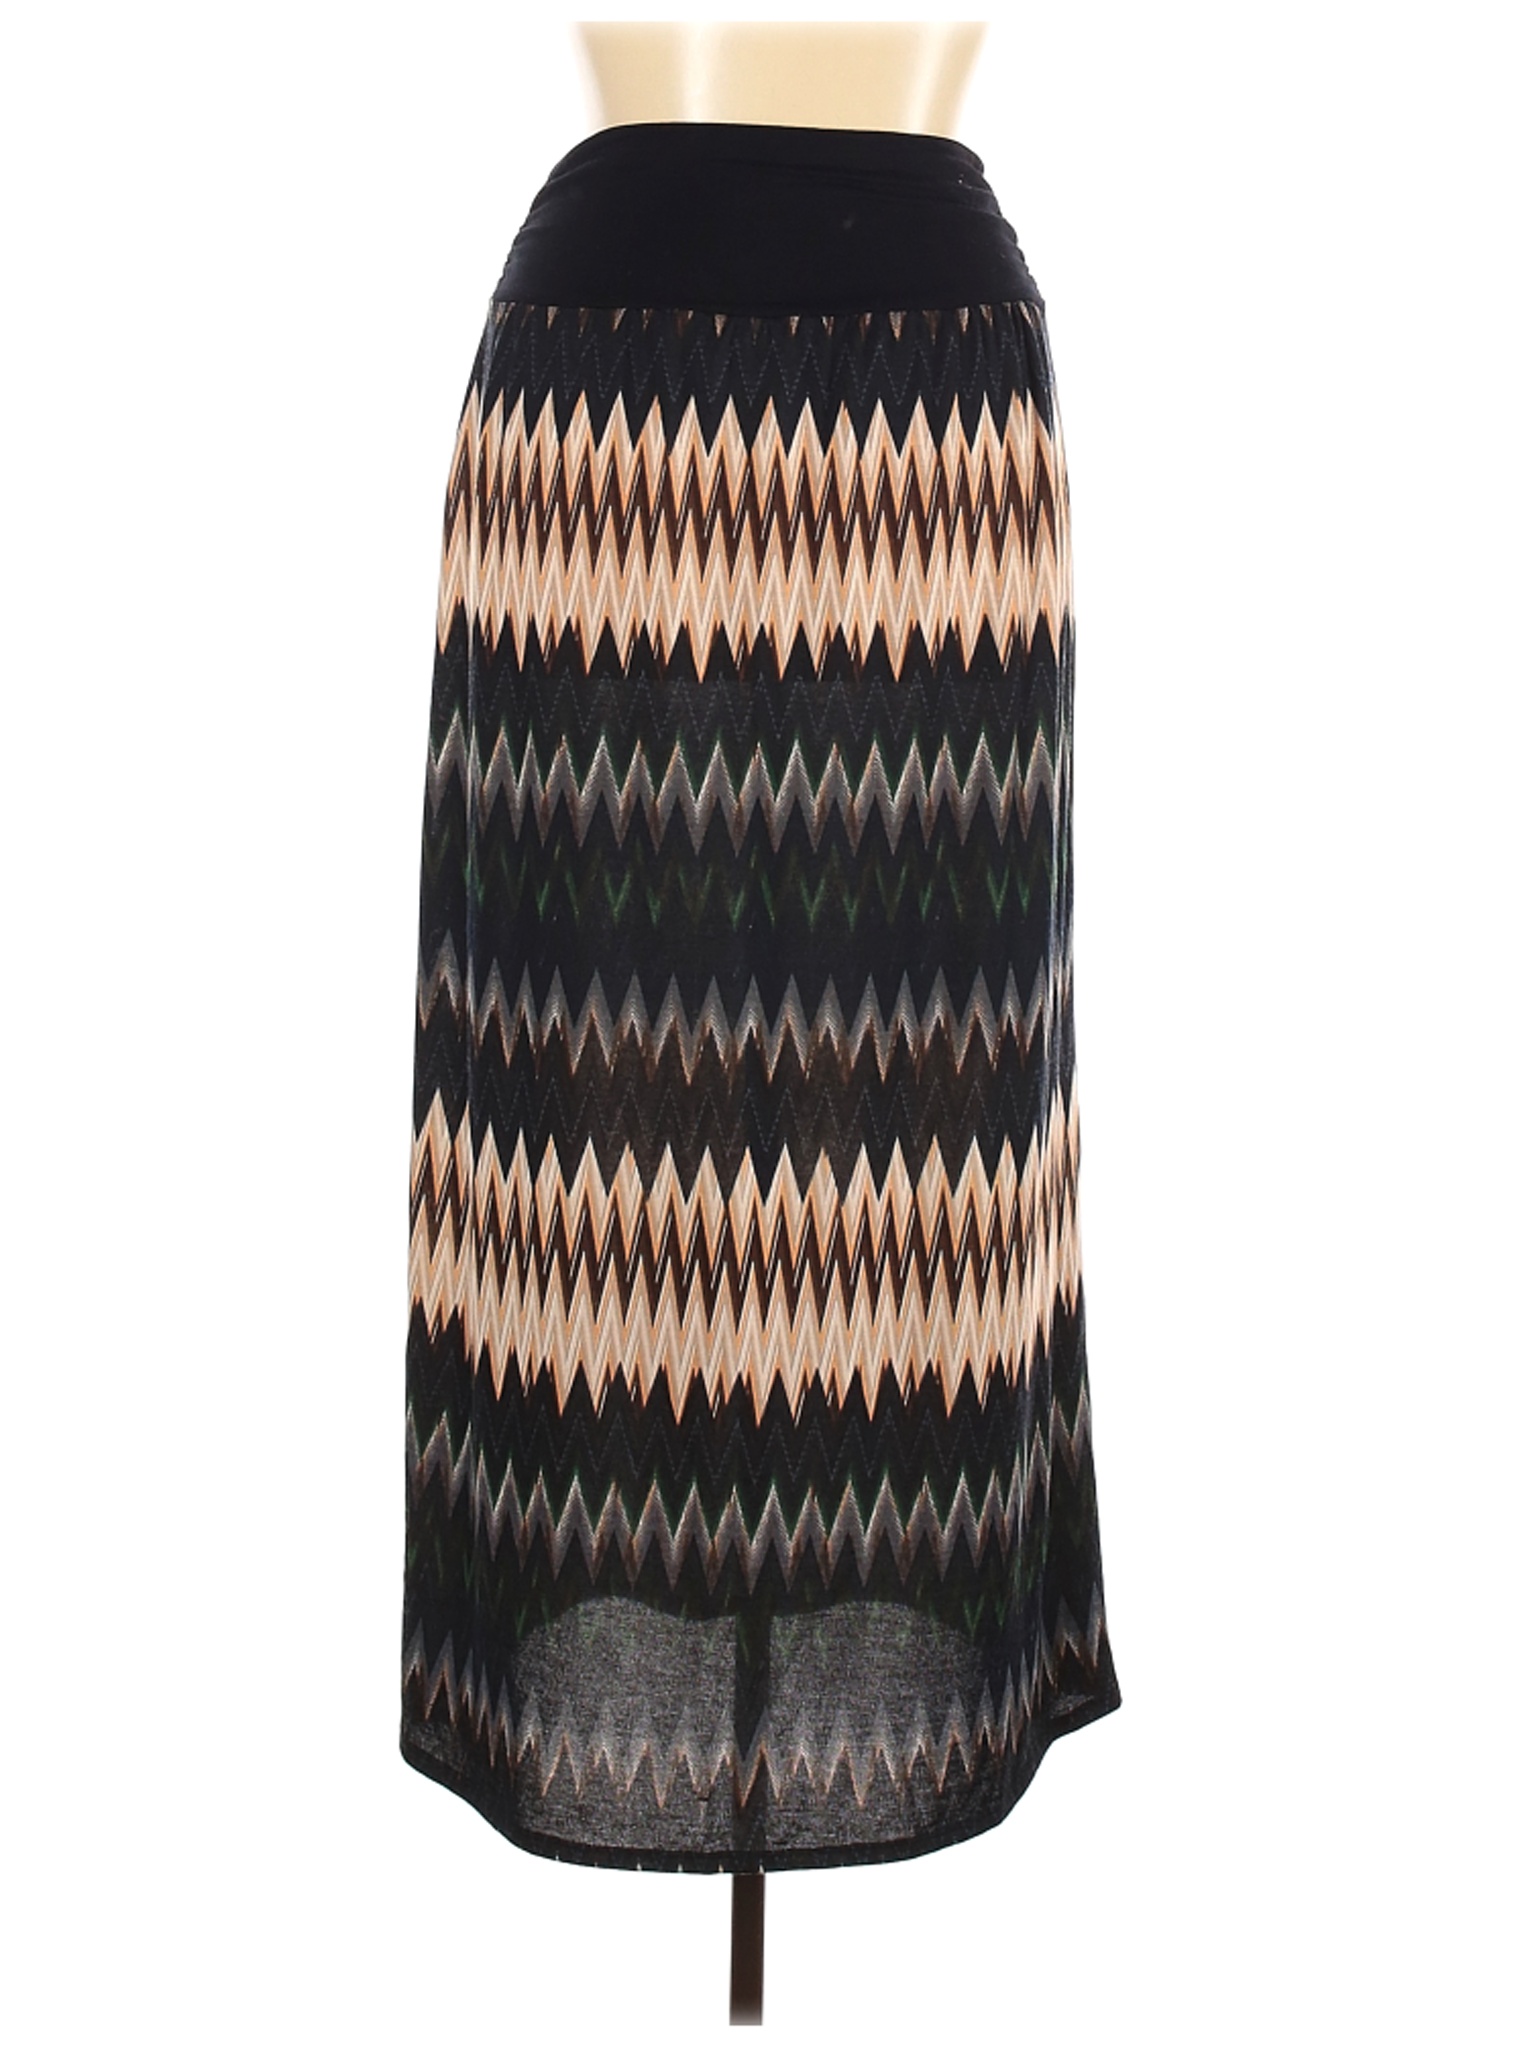 I.N. Studio Women Black Casual Skirt 1X Plus | eBay